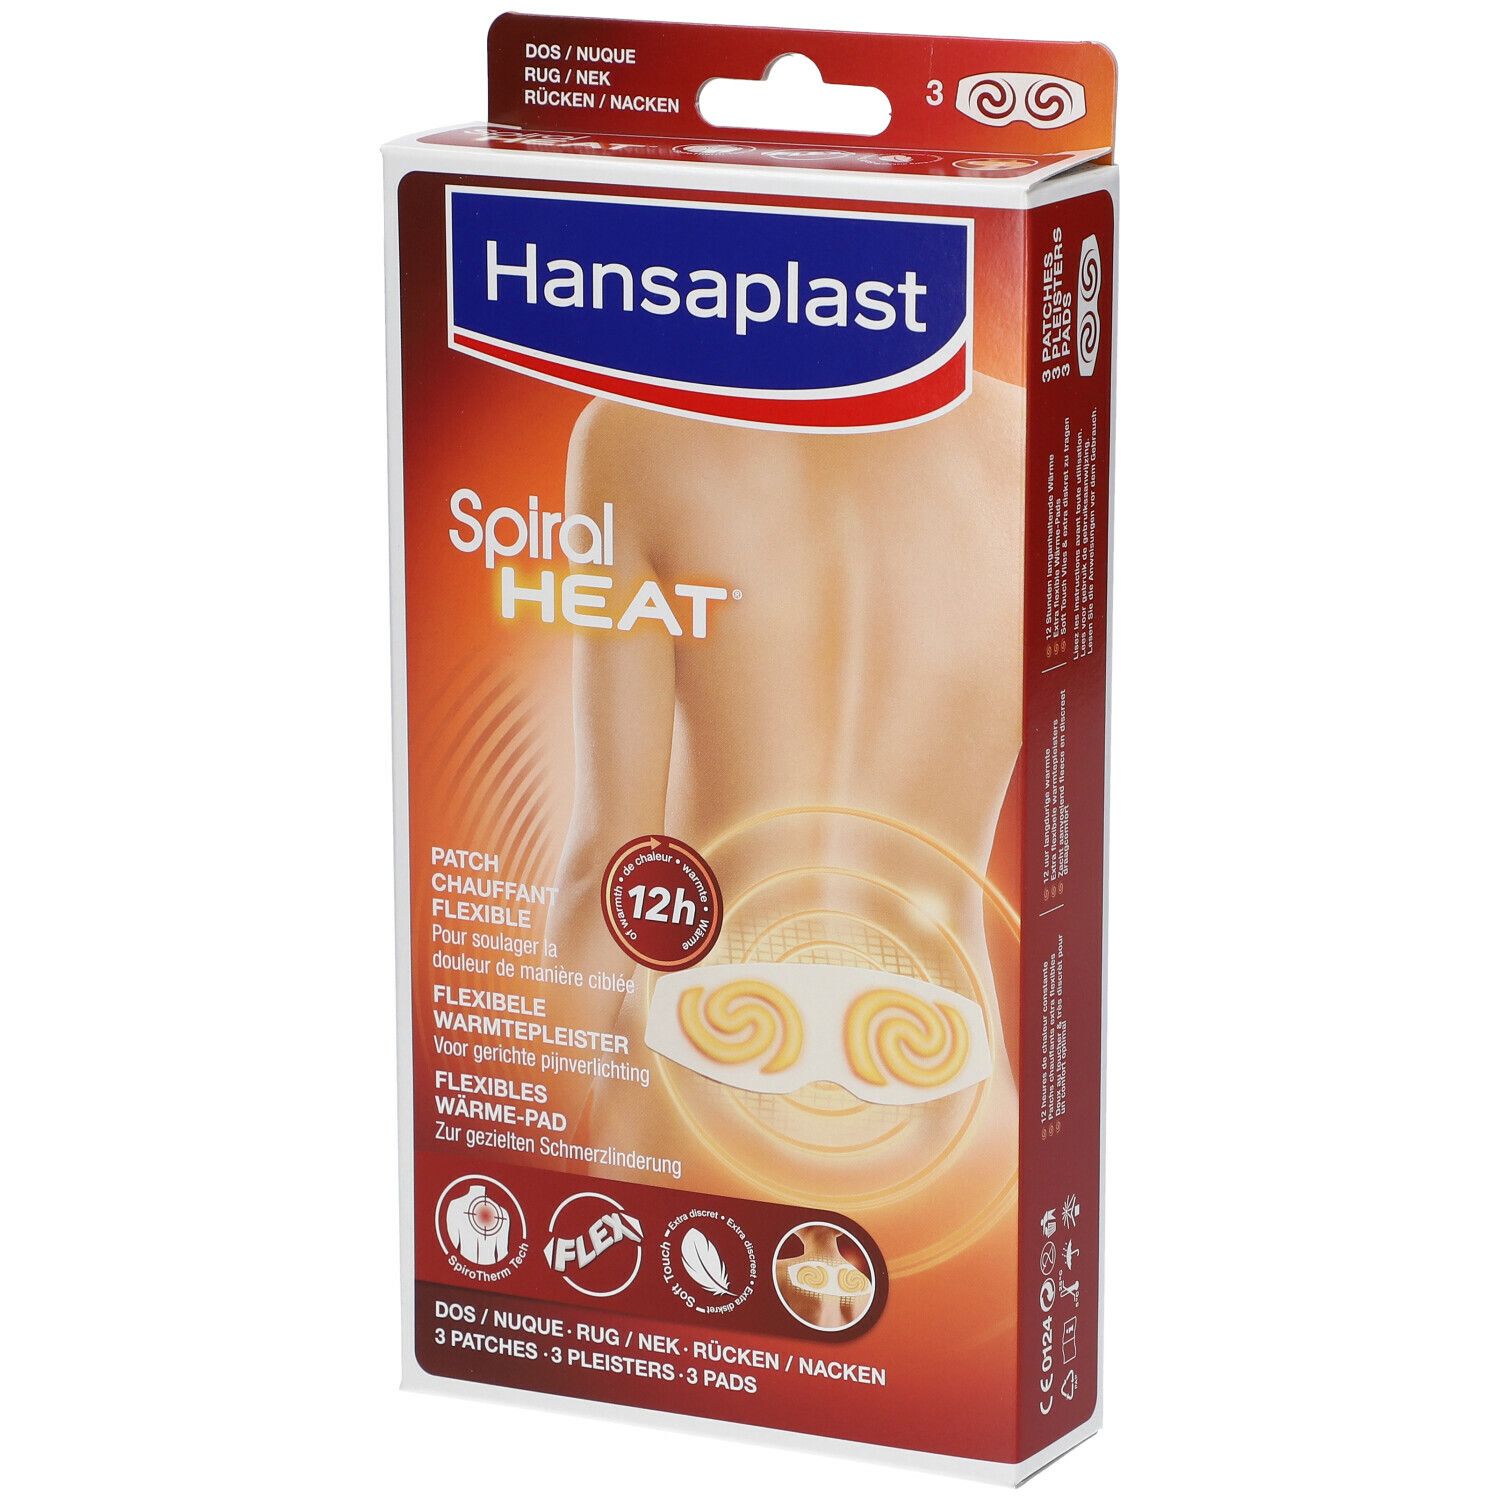 Hansaplast Spiral Heat­?? Dos & Nuque Patchs chauffants flexibles